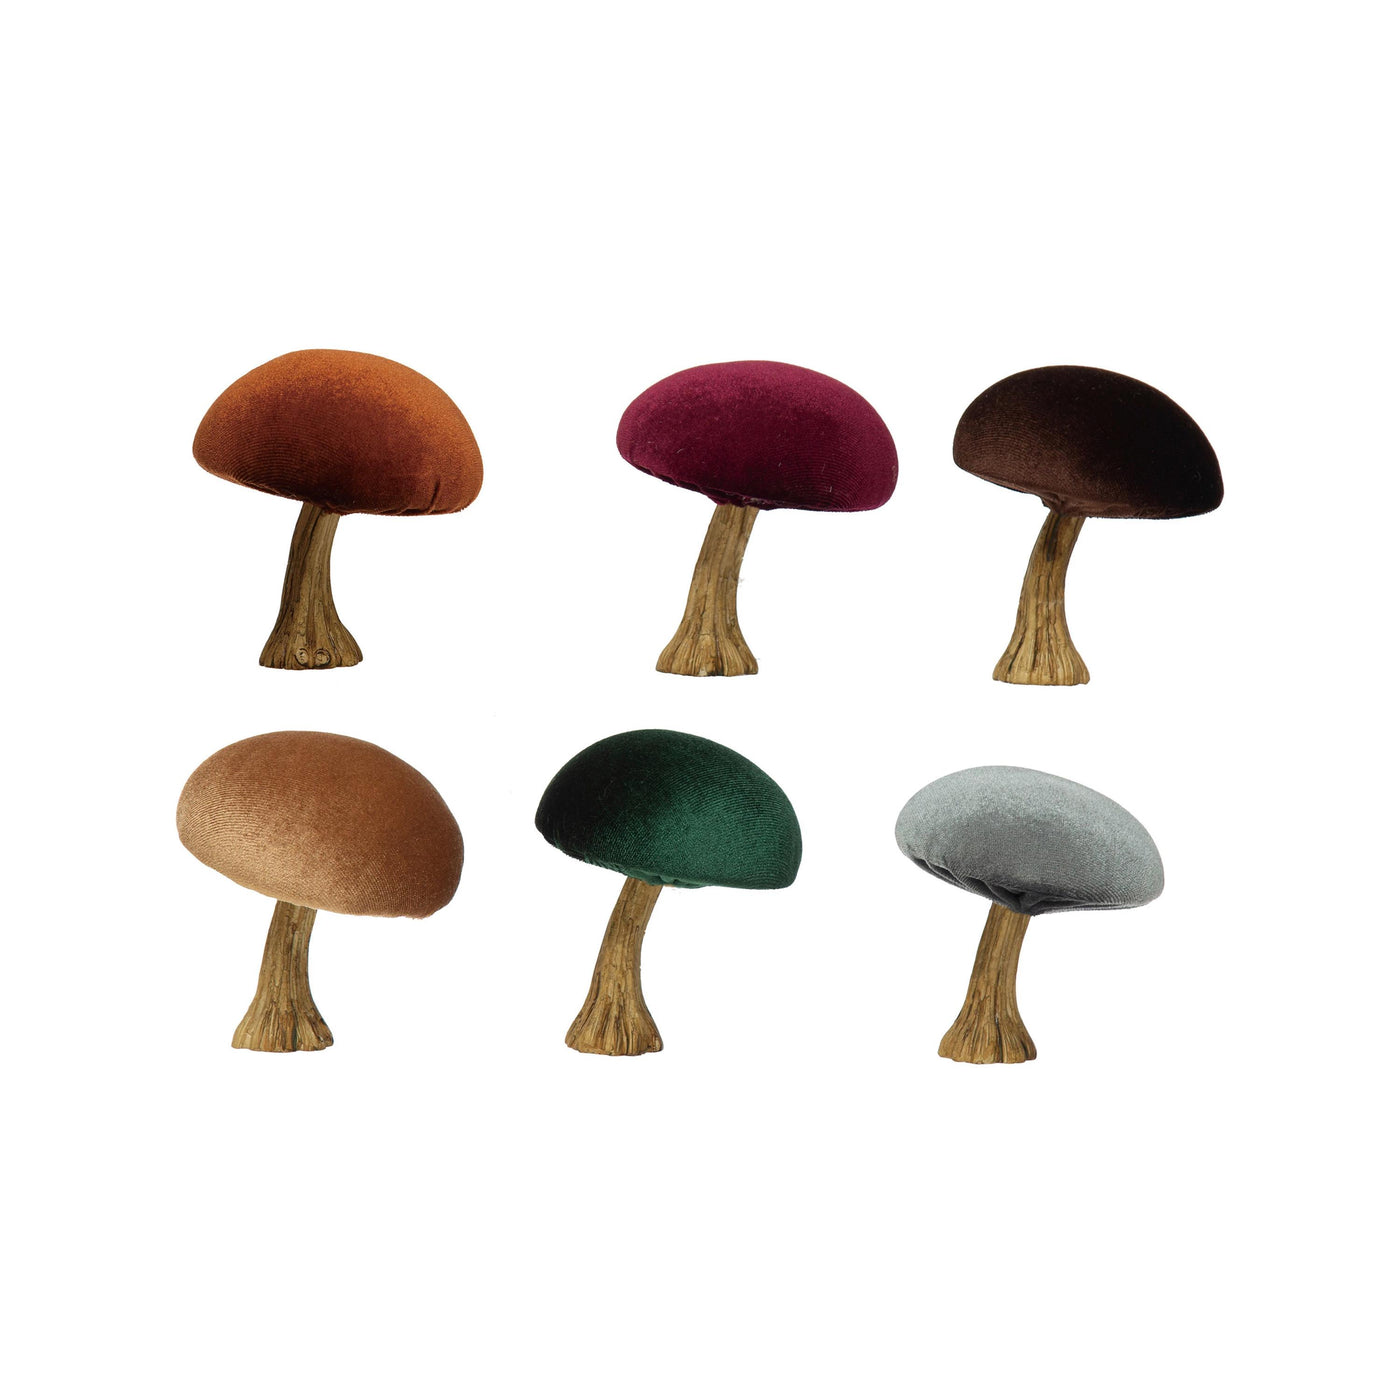 Jewel-Toned Velvet Topped Mushrooms - Choose Color